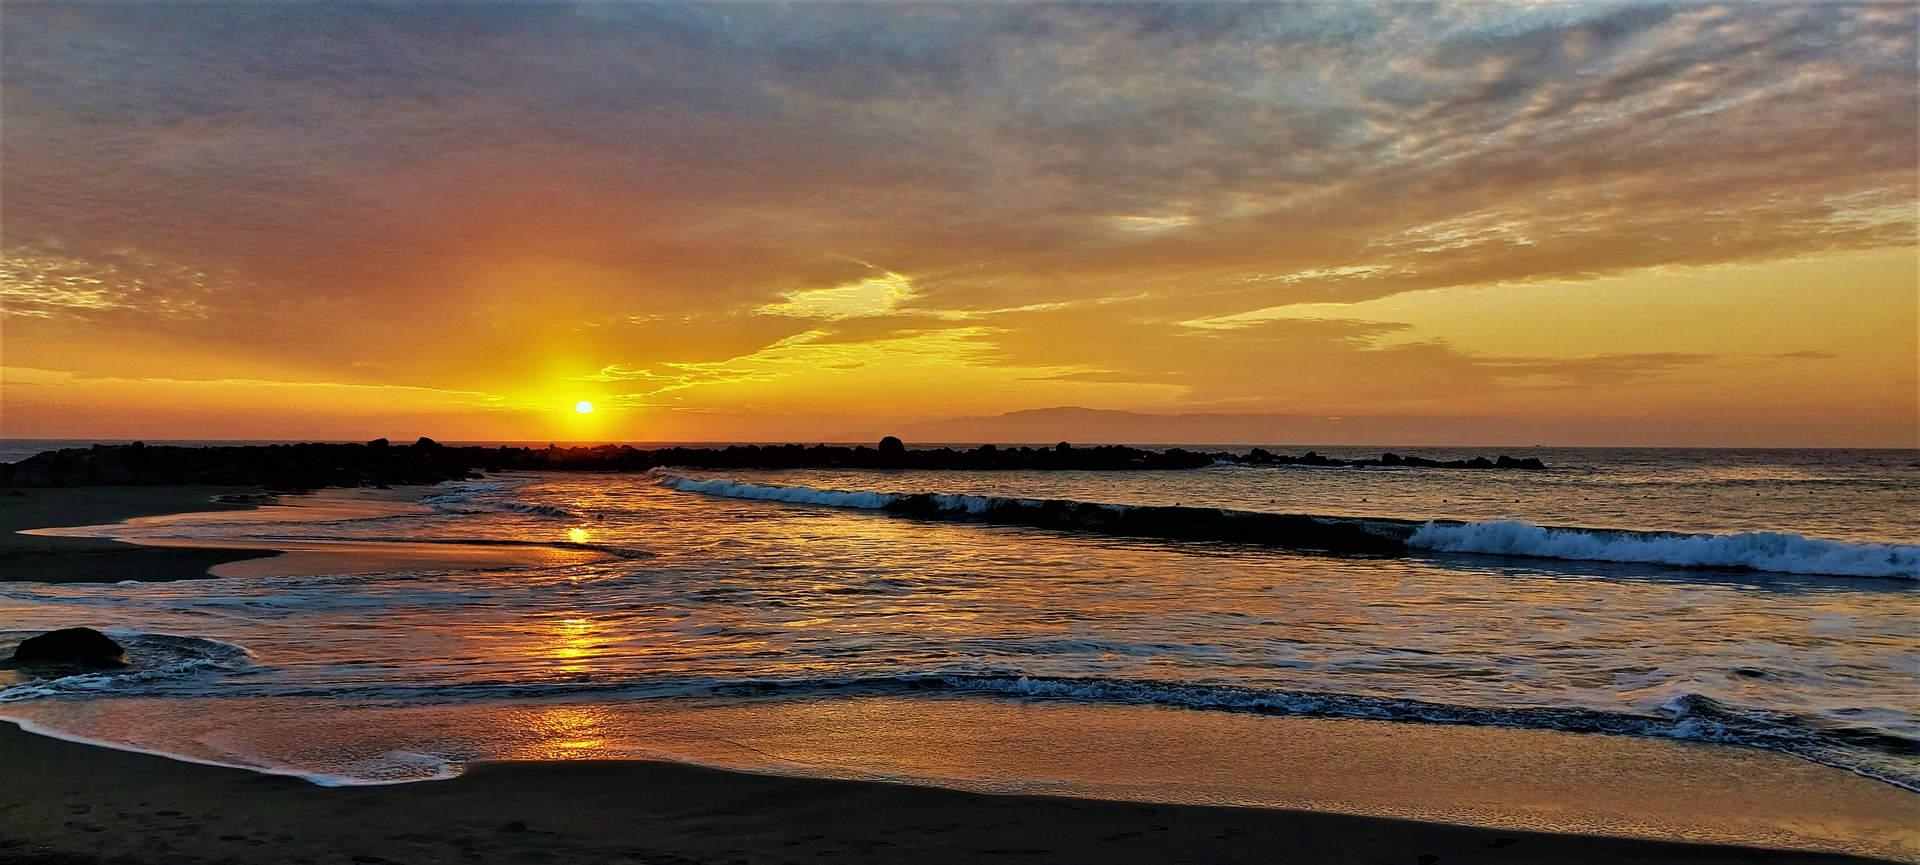 Playa Troya - plaża Costa Adeje (9)